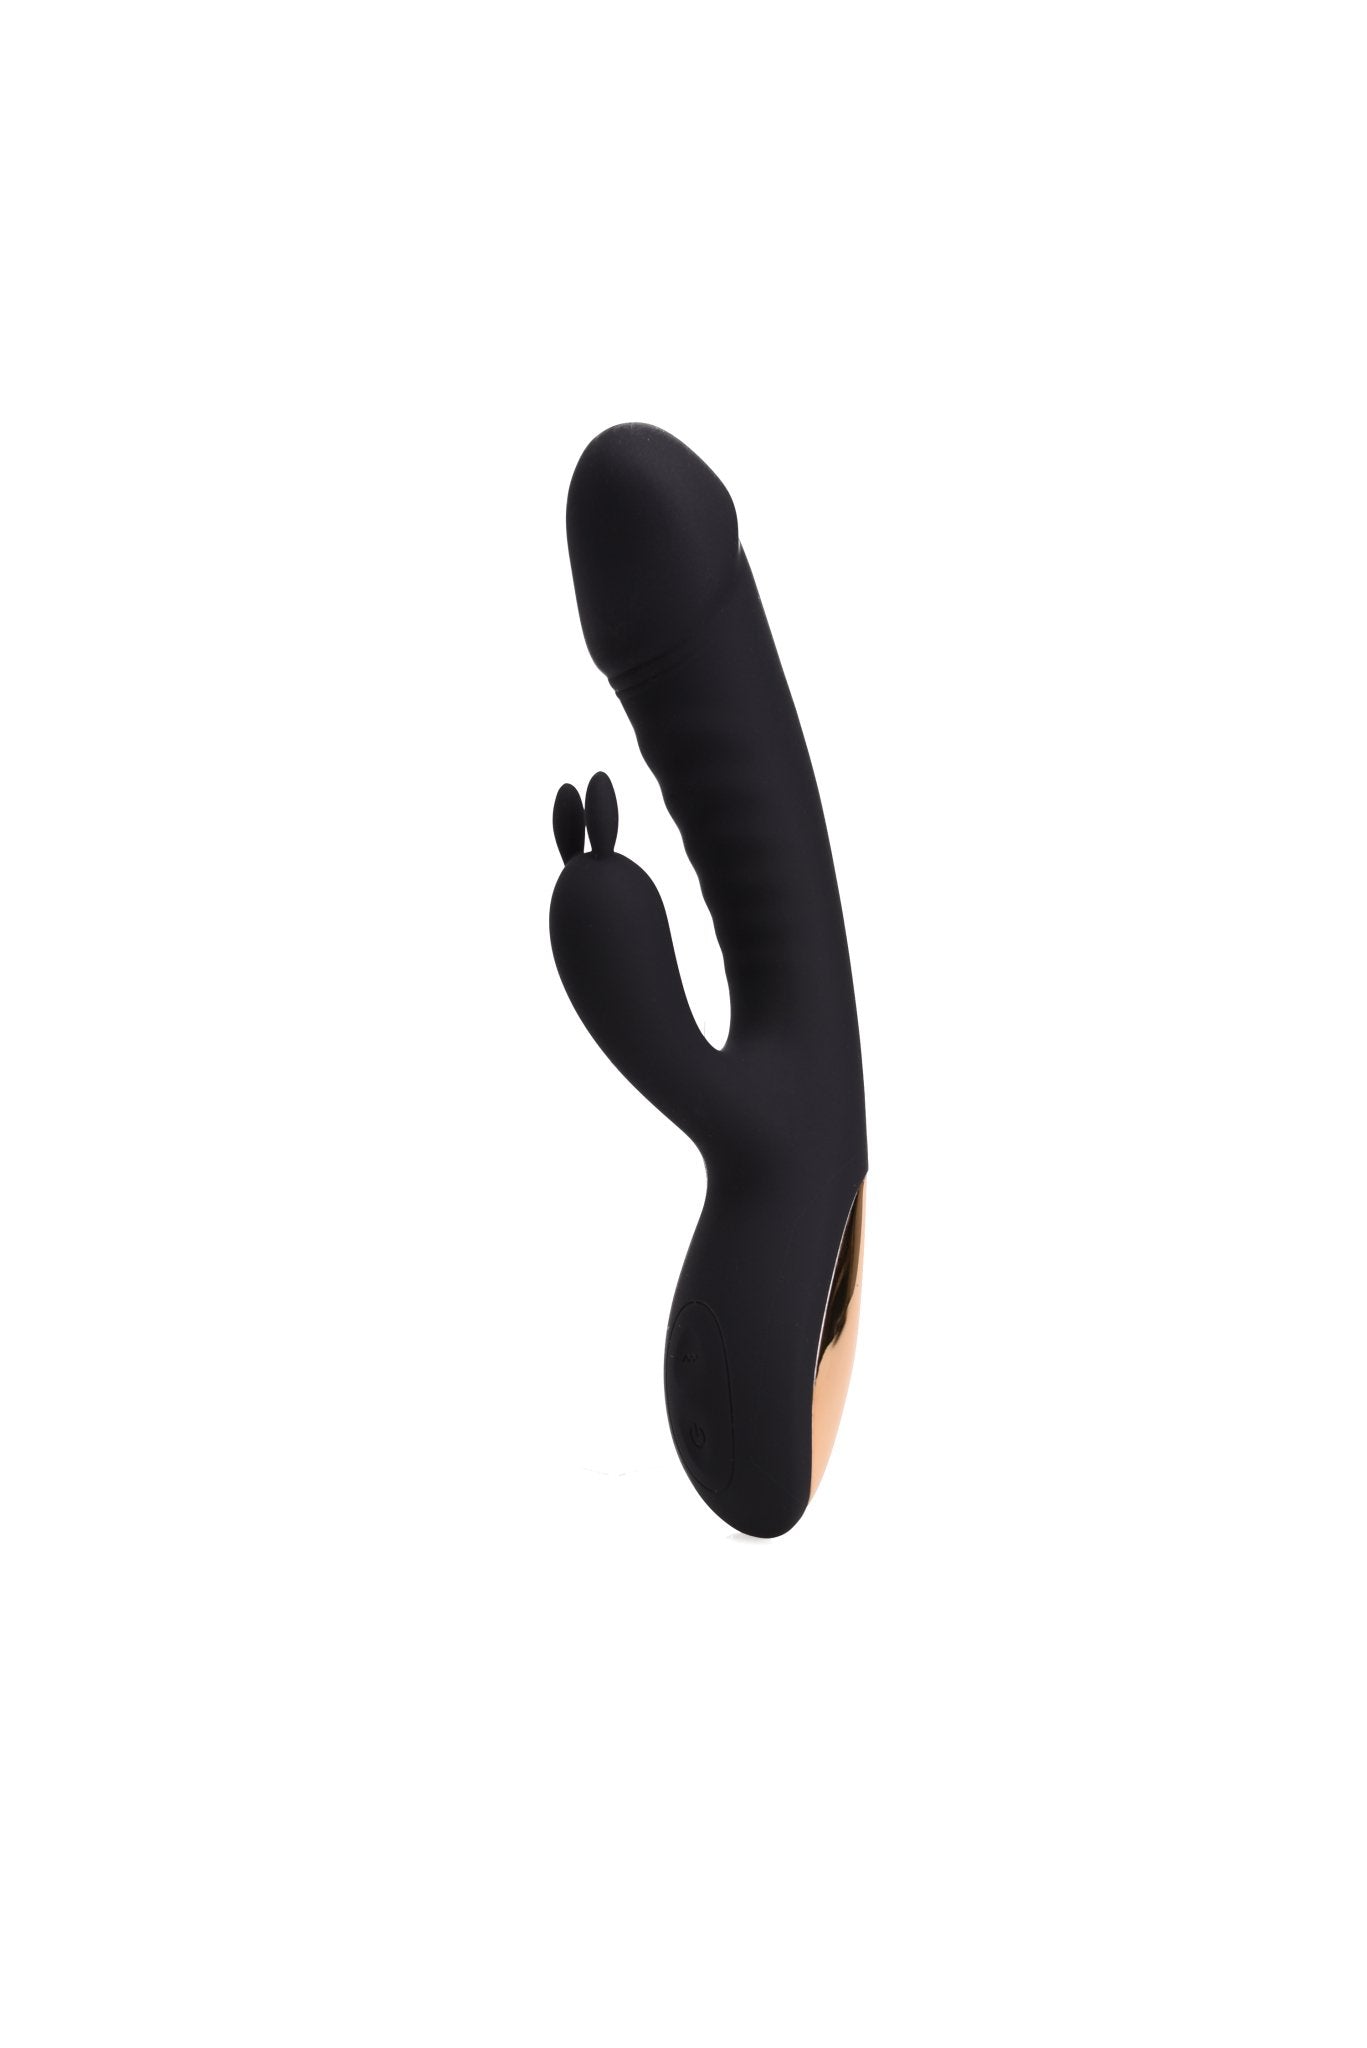 Premium Rabbit & Massage Wand Vibrators: Ultimate Pleasure & Relaxation - Sexy-Fantasy